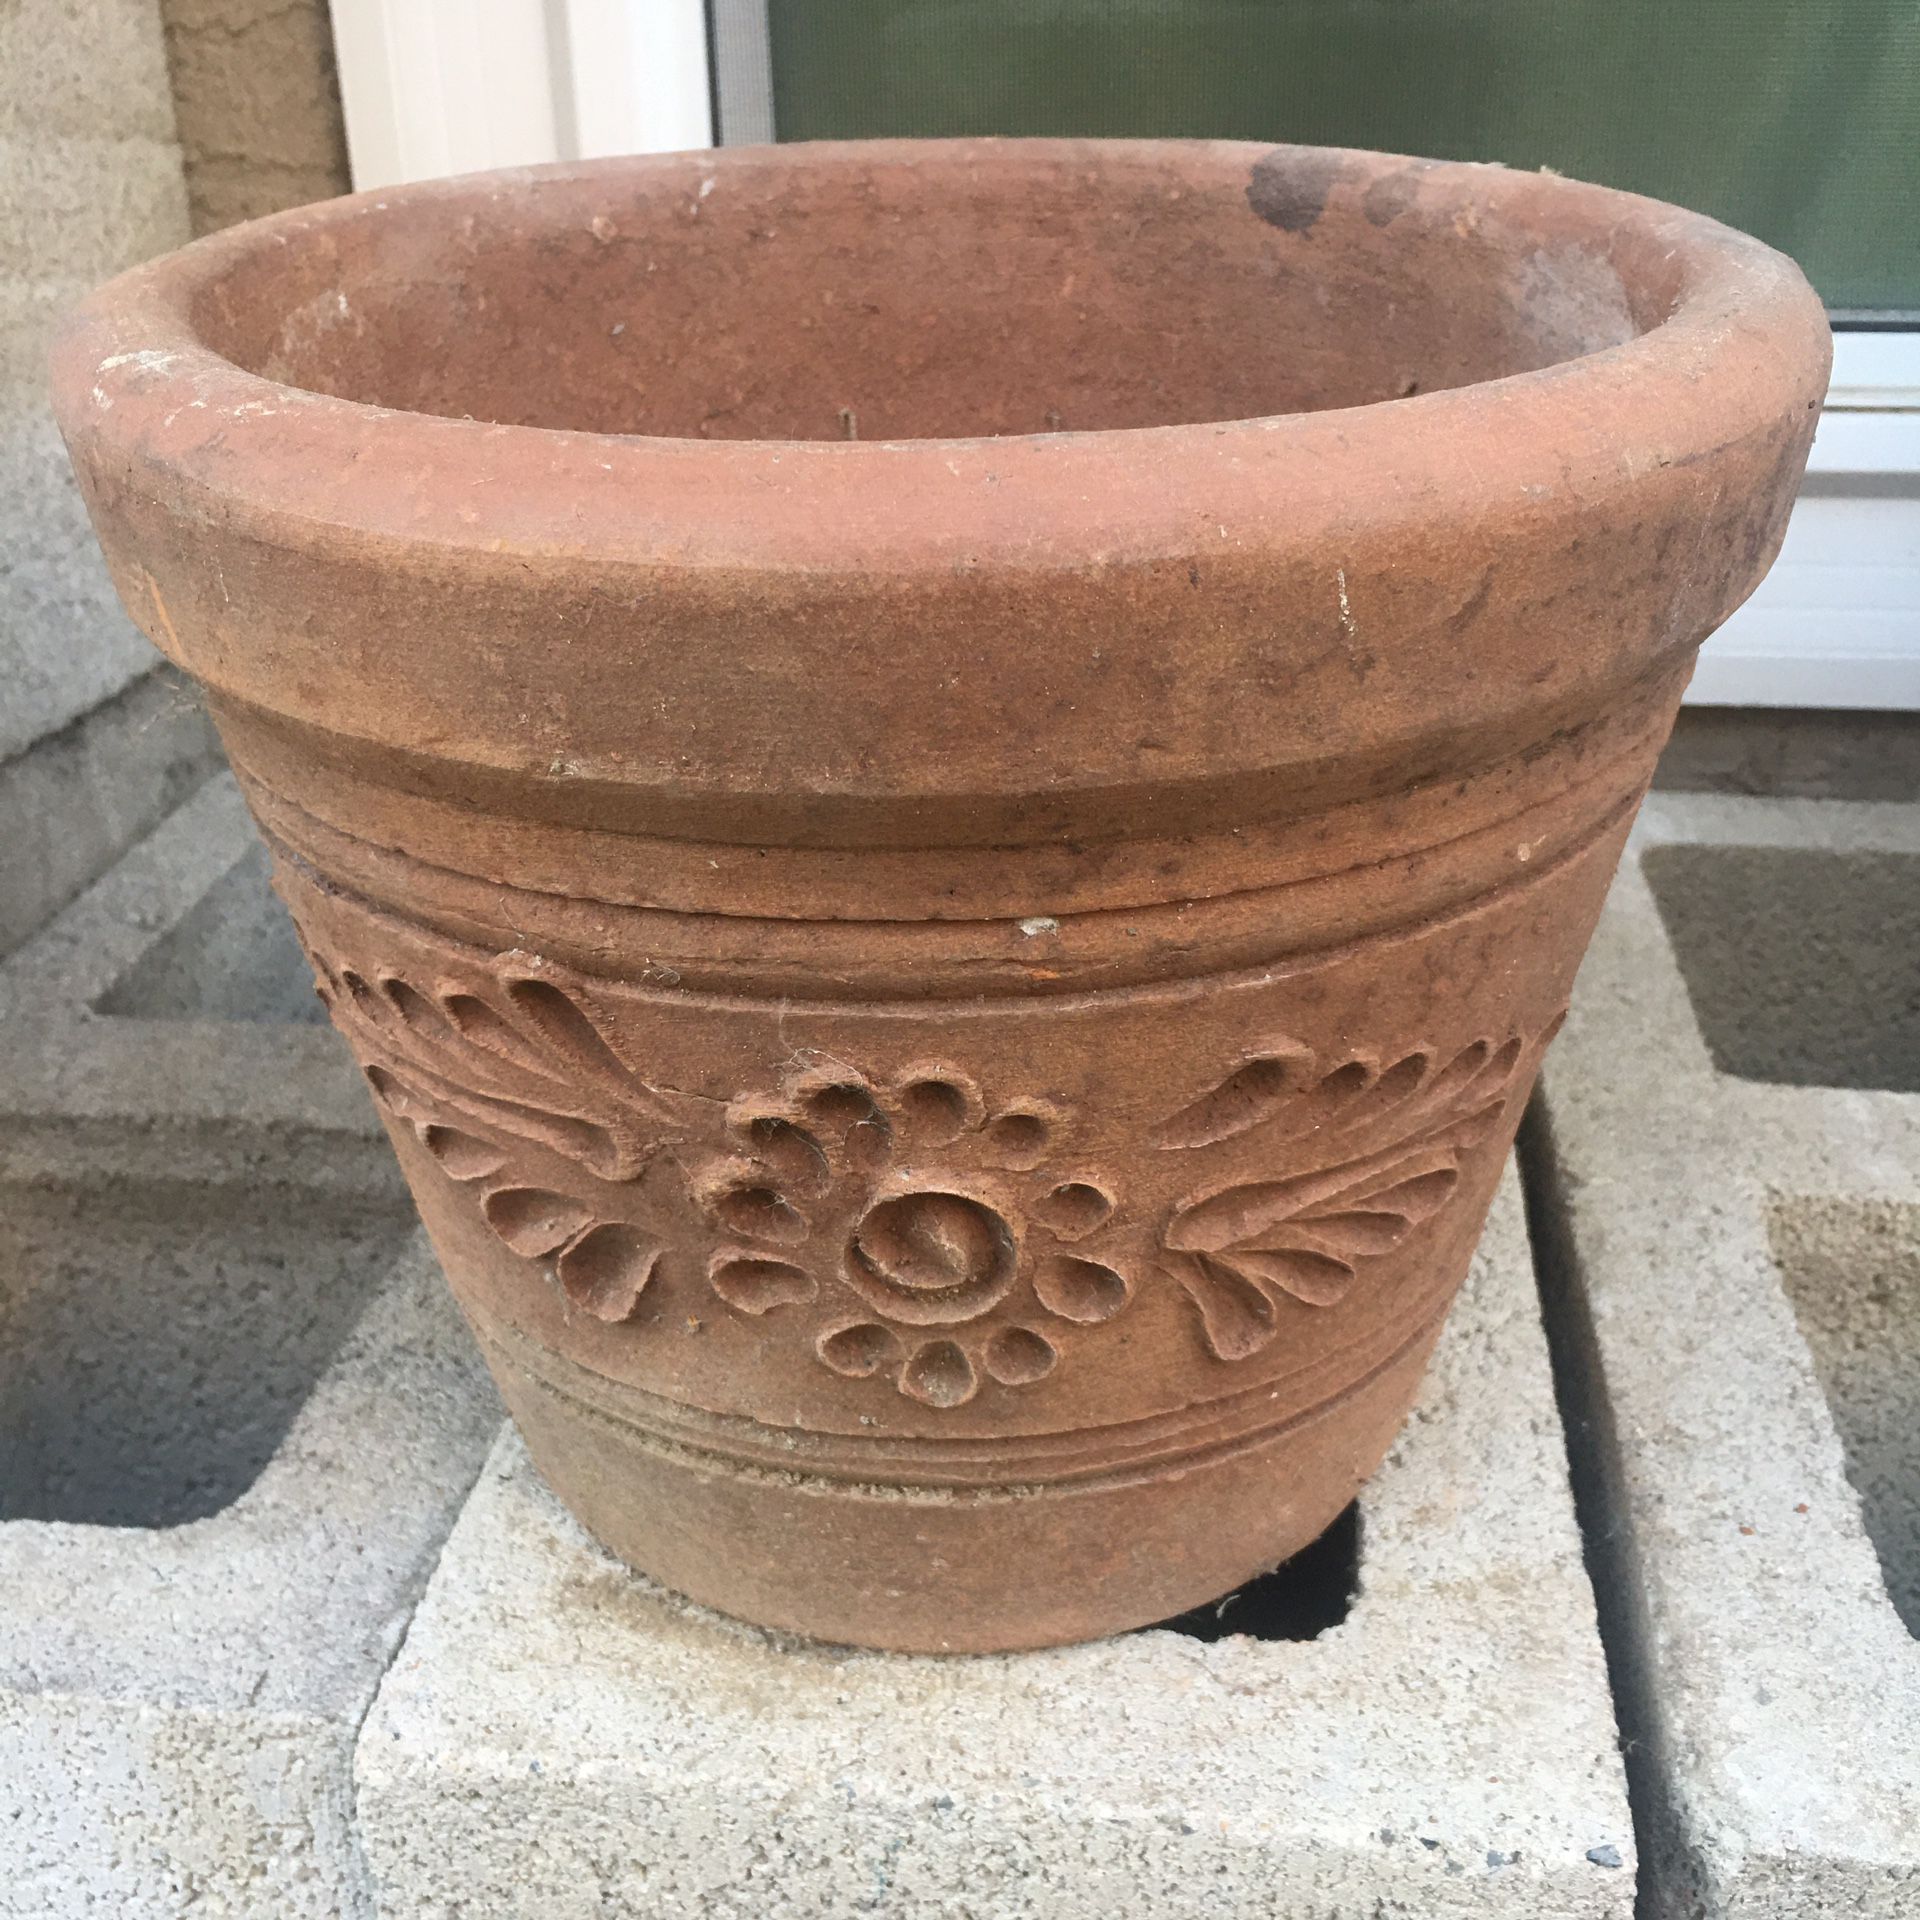 Pot #2 Flower design